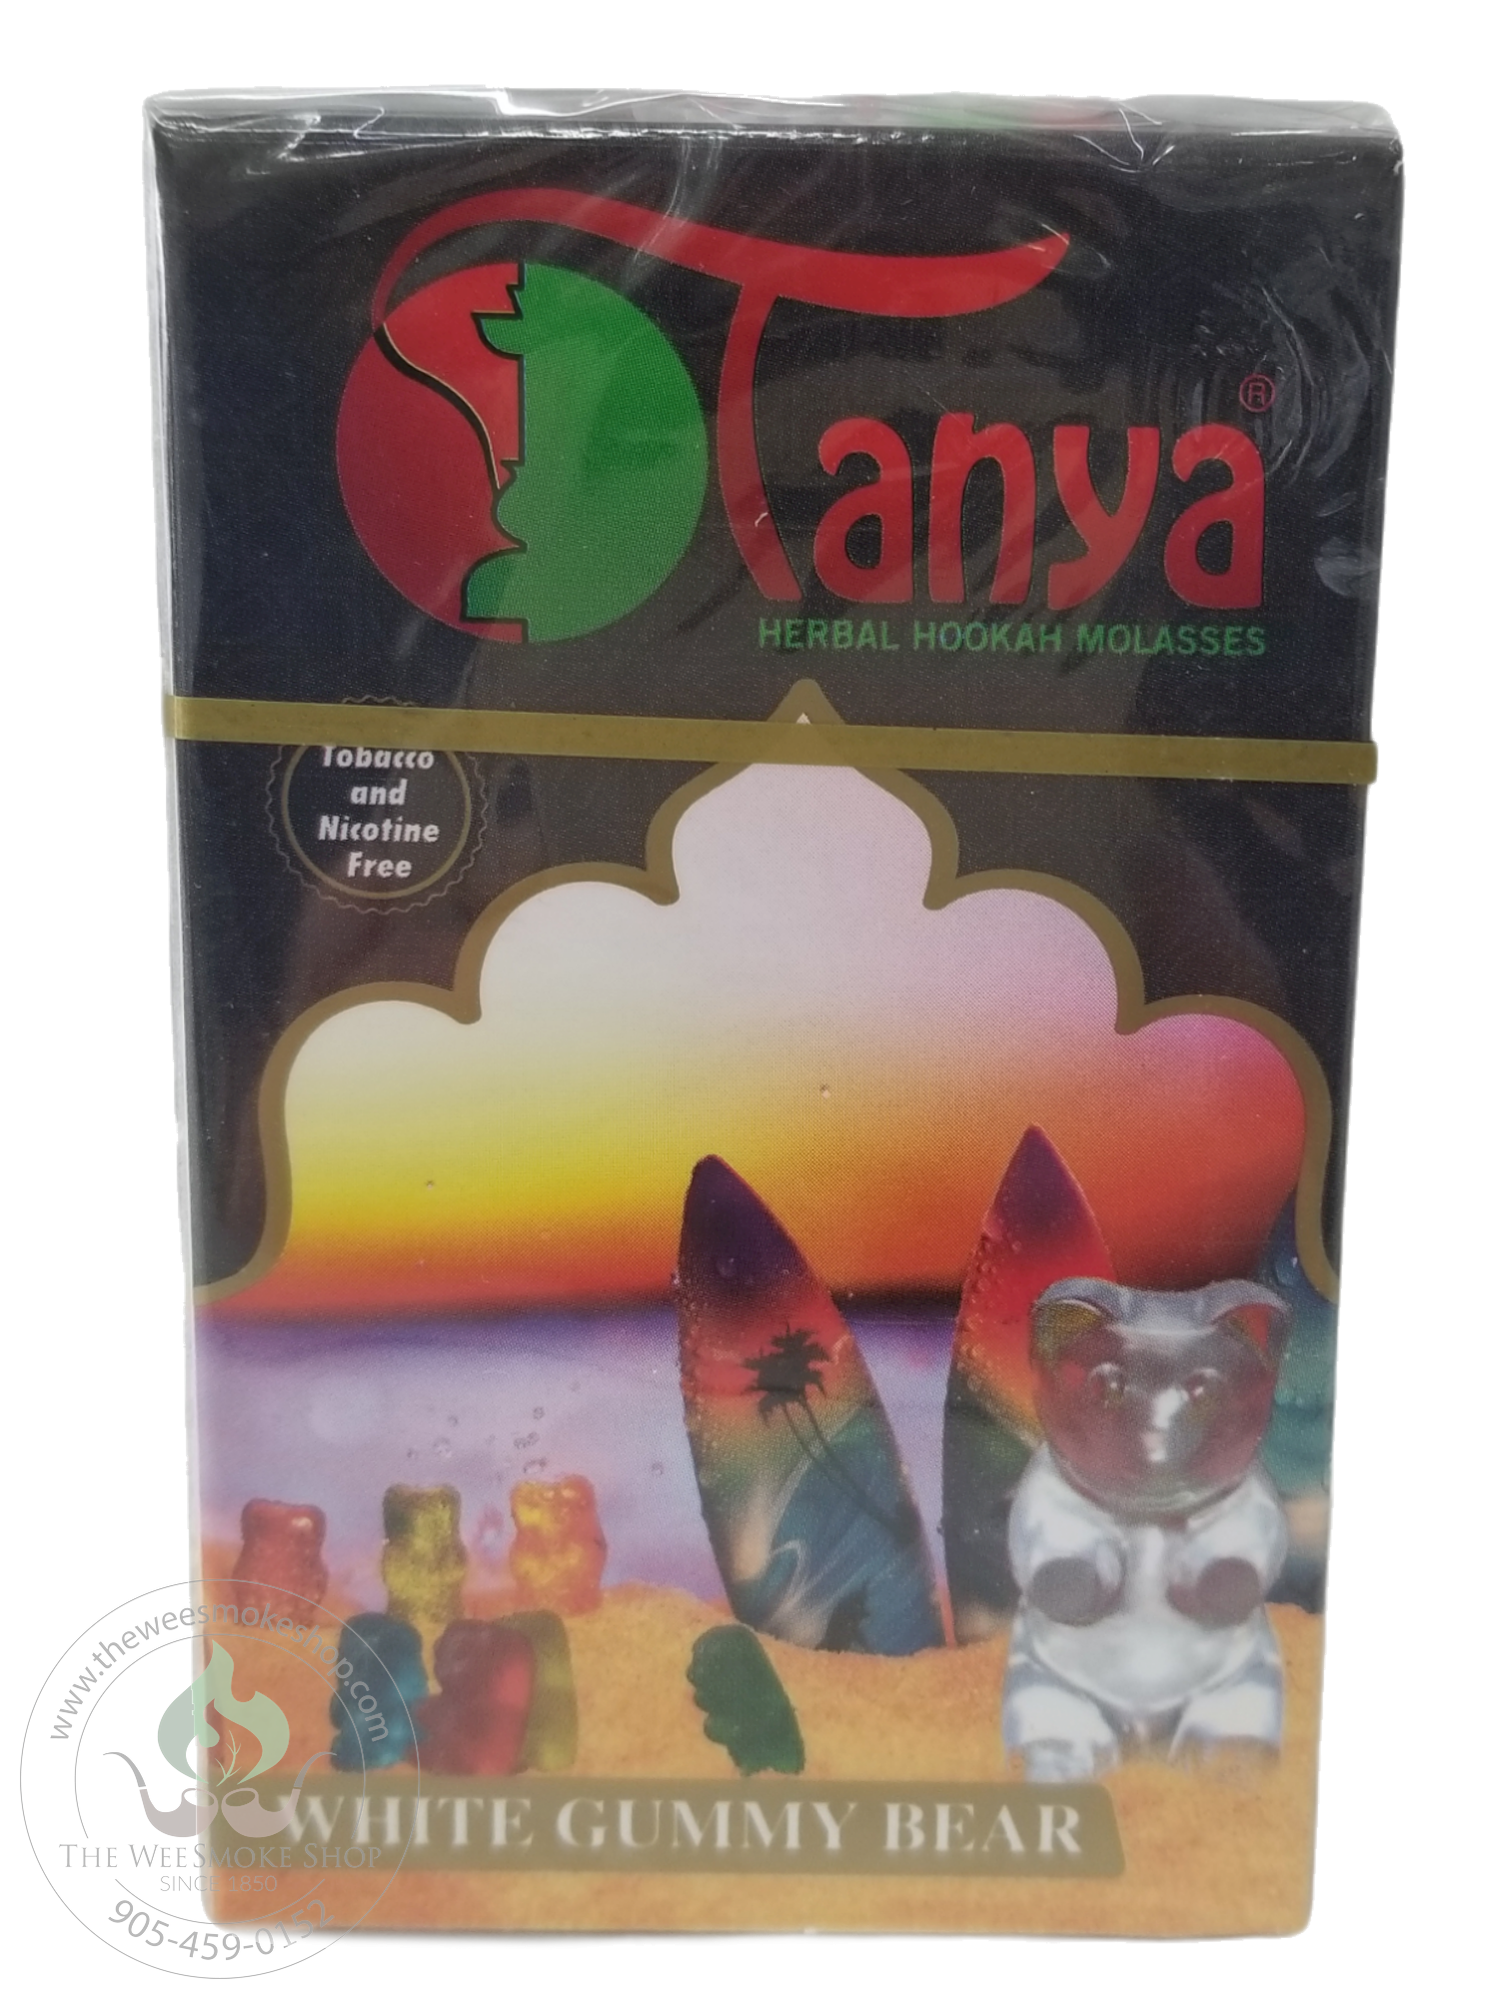 White Gummy Bear Tanya Herbal Molasses (50g)-Hookah accessories-The Wee Smoke Shop